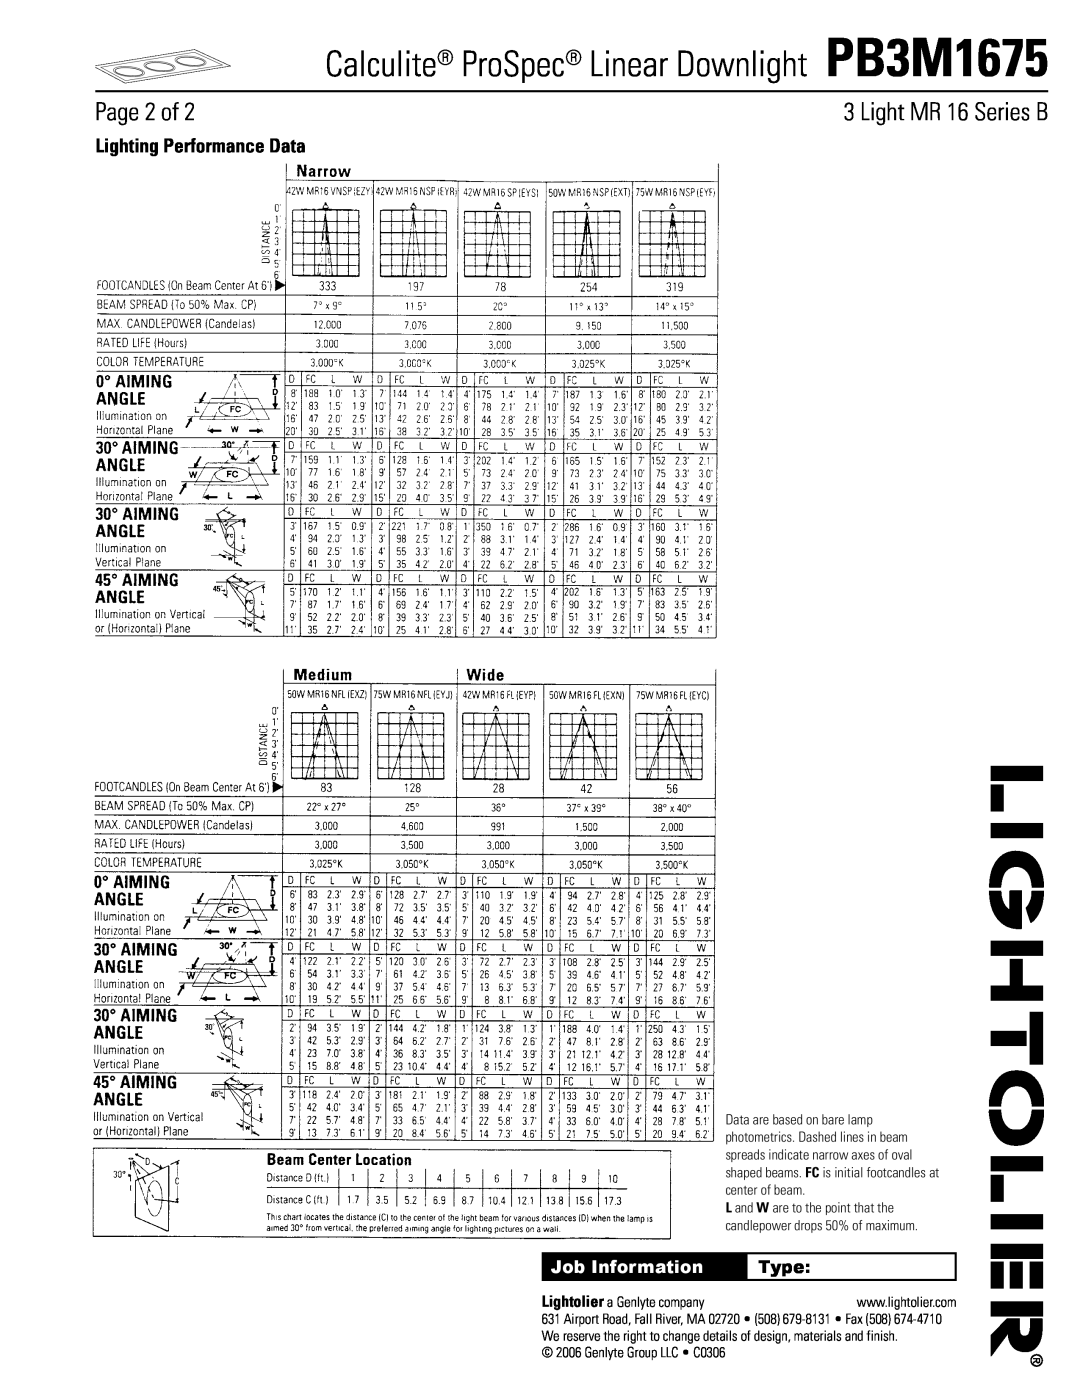 Lightolier Page 2 of, Lighting Performance Data, Calculite ProSpec Linear Downlight PB3M1675, Light MR 16 Series B 